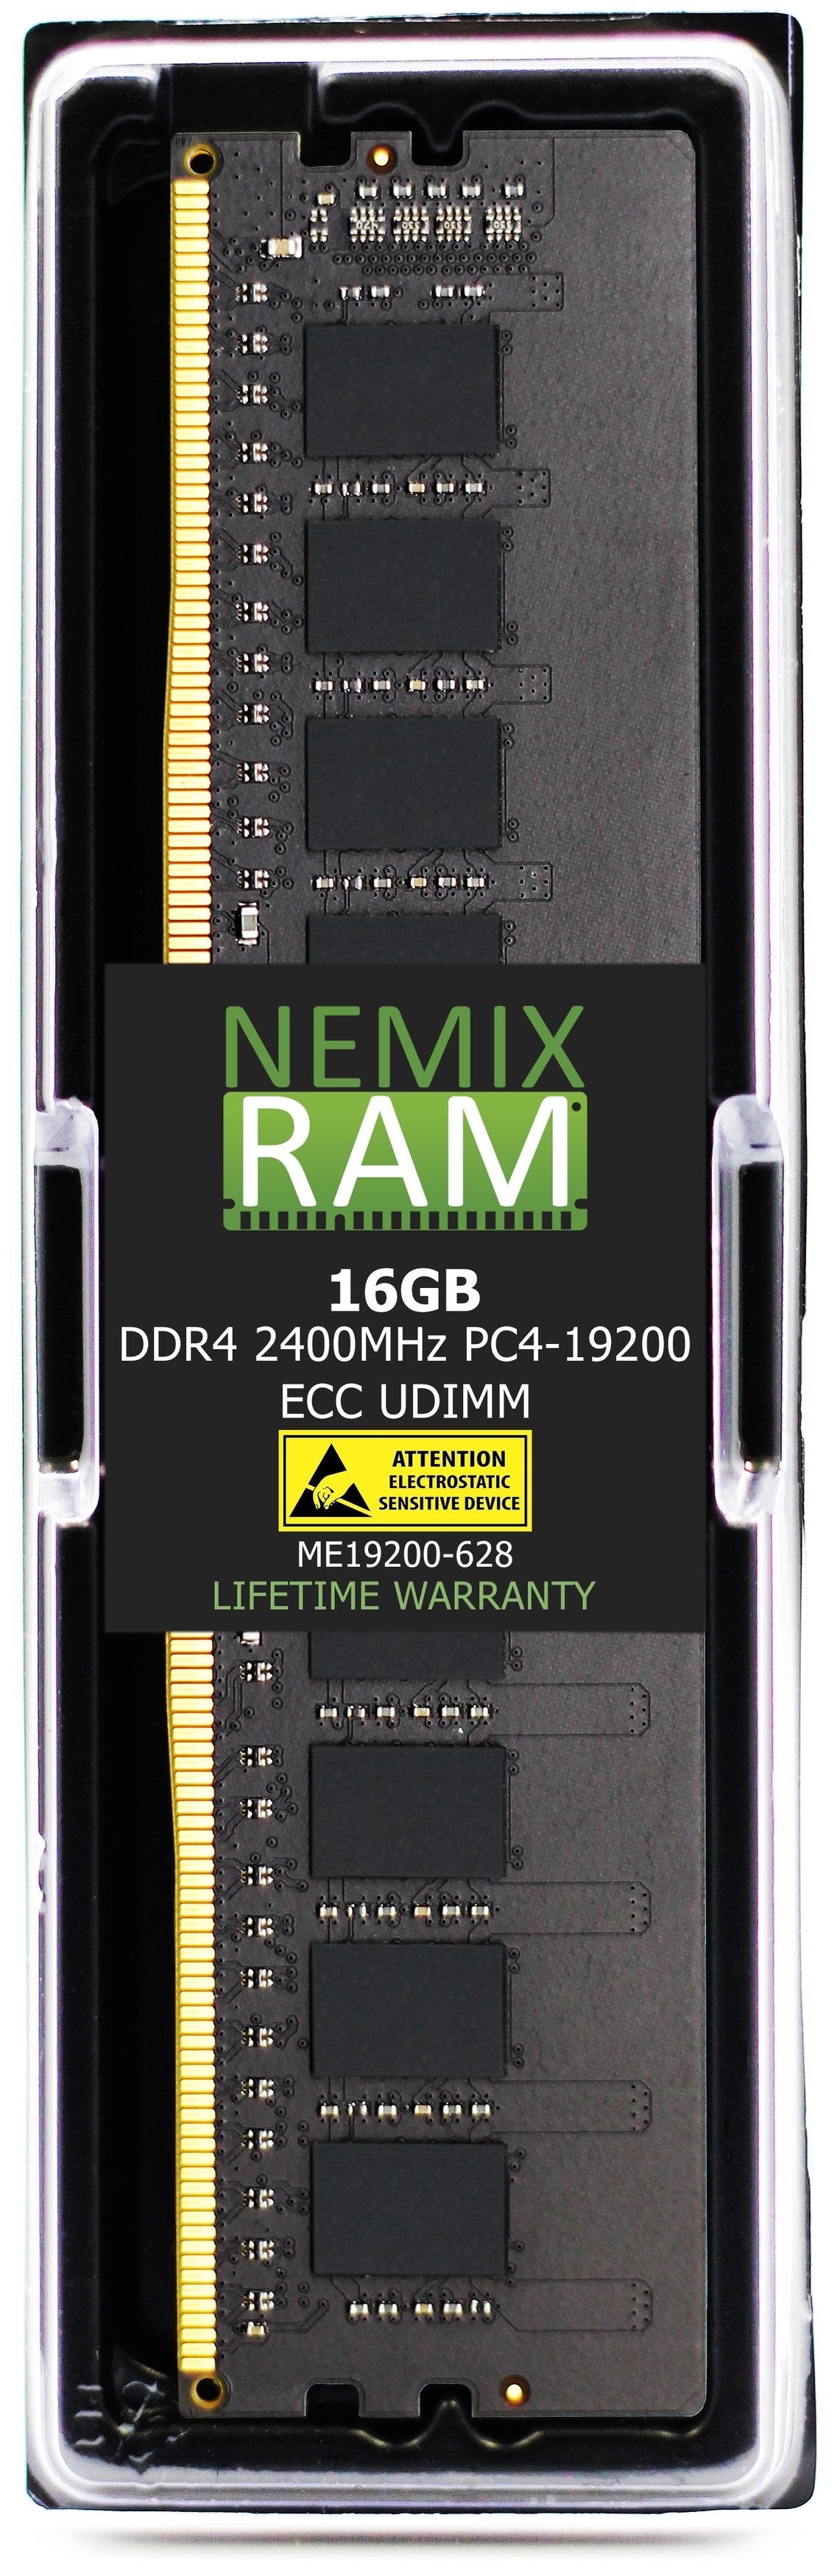 16GB DDR4 2400MHZ PC4-19200 ECC UDIMM Compatible with Supermicro MEM-DR416L-SL01-EU24